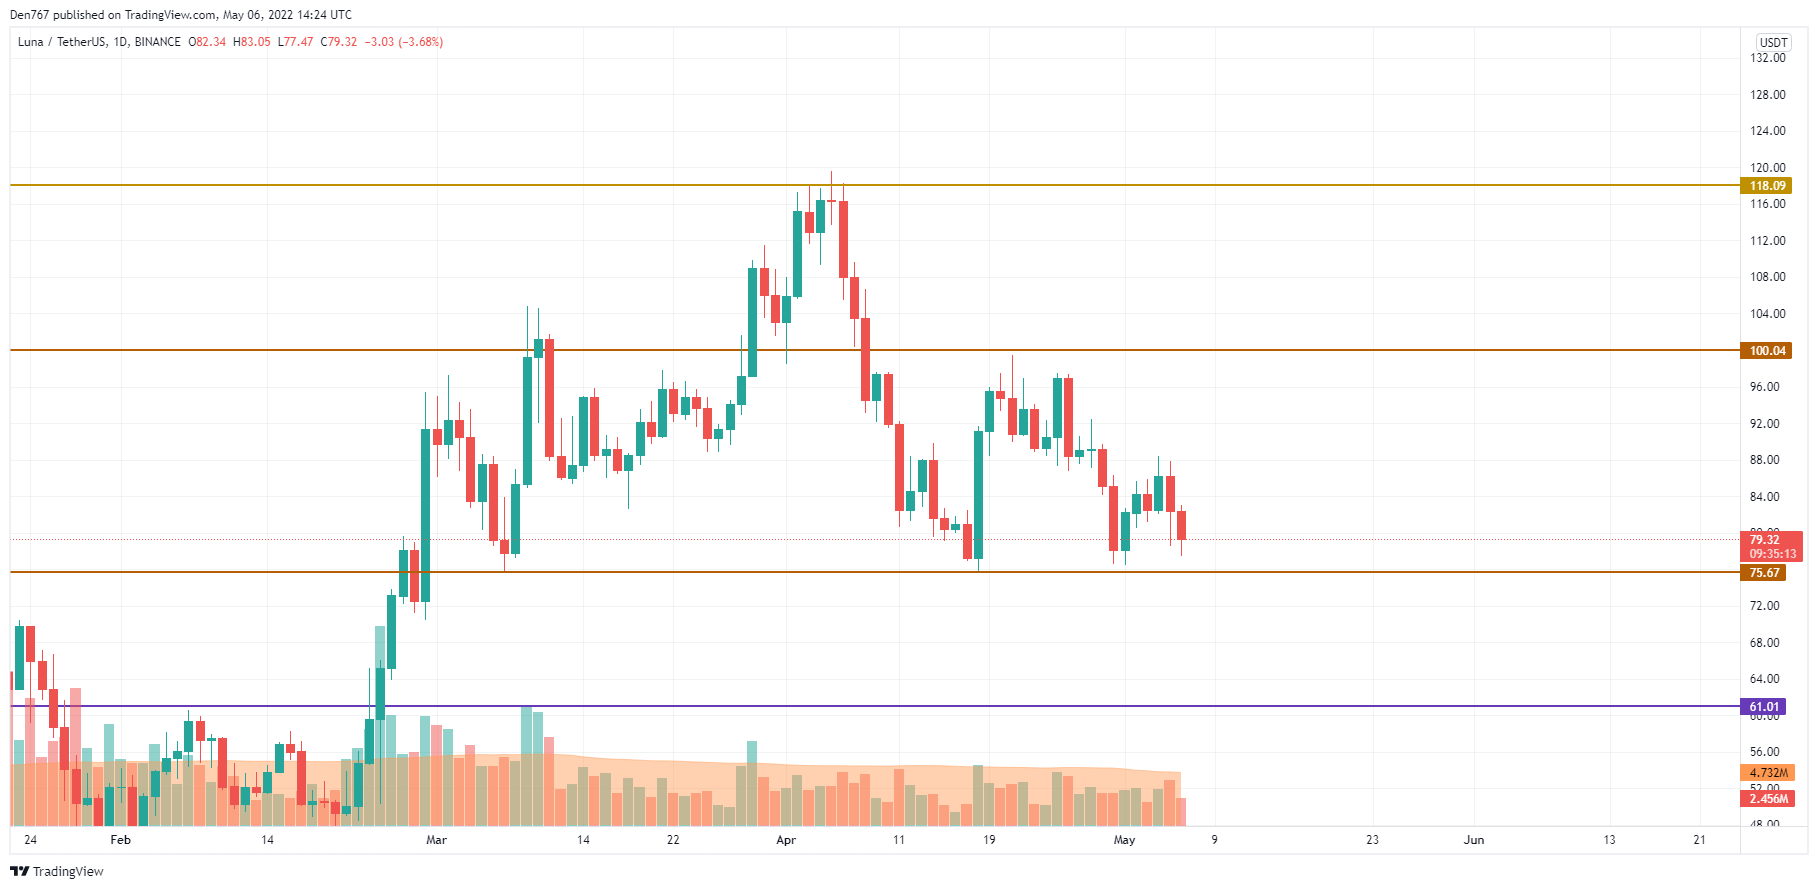 LUNA/USD chart by TradingView